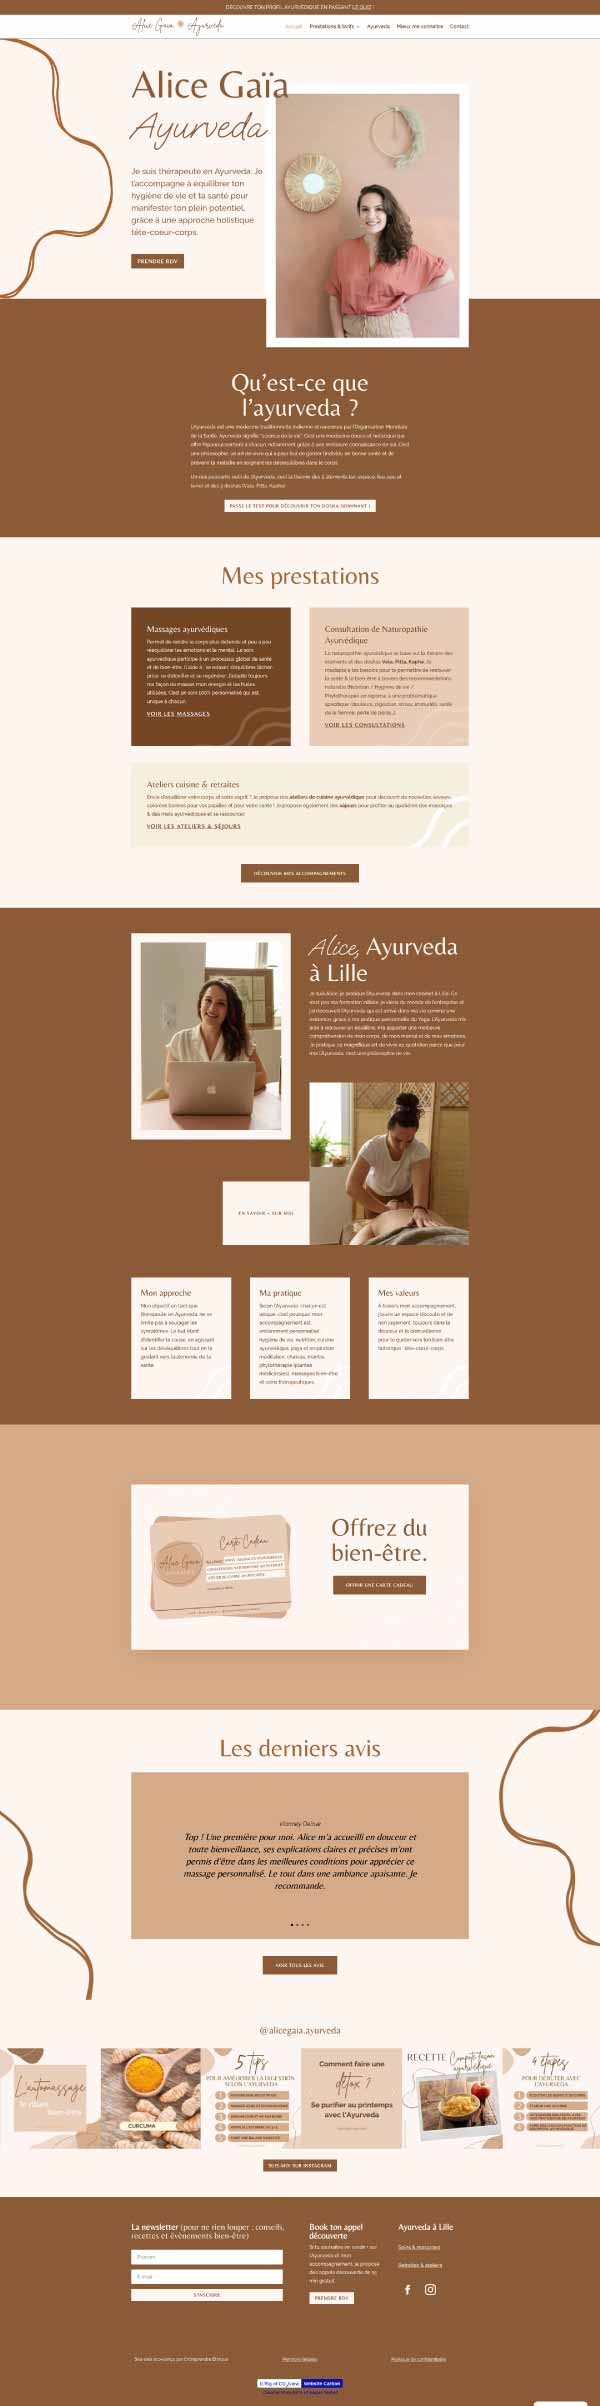 Page d'accueil du site Alice Gaïa Ayurveda